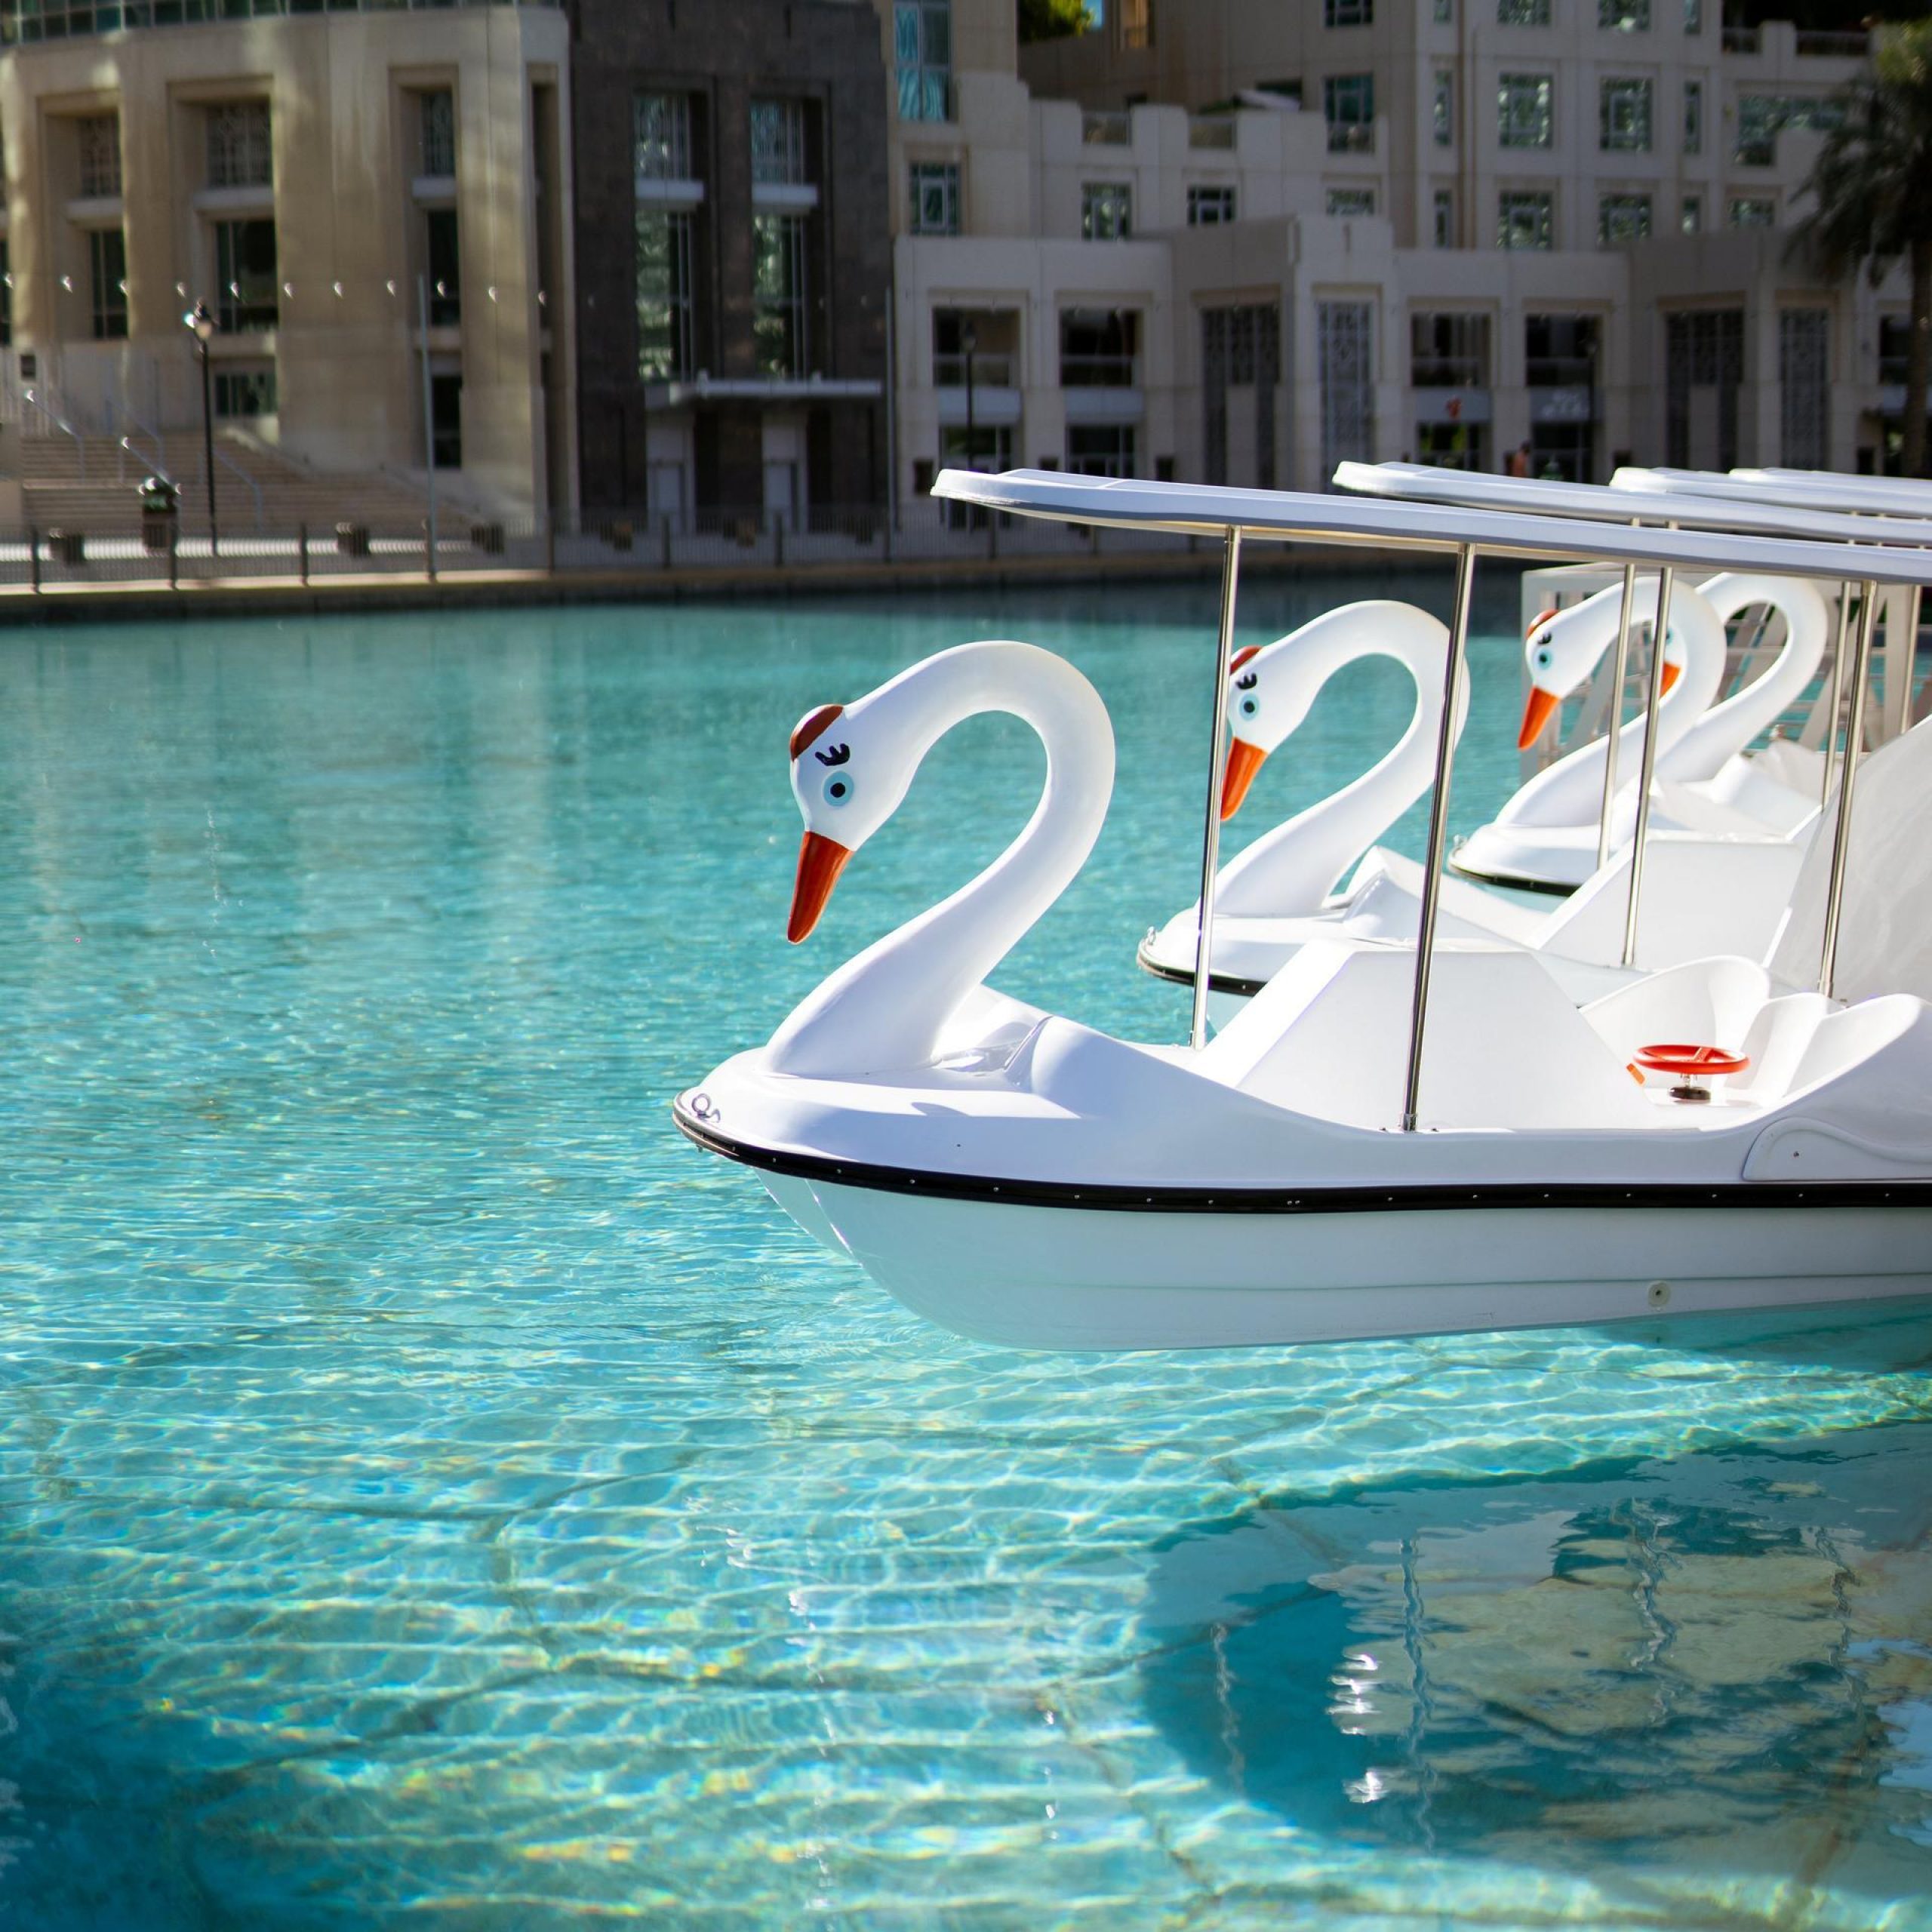 Dubai Fountain Pedal Swan Boats